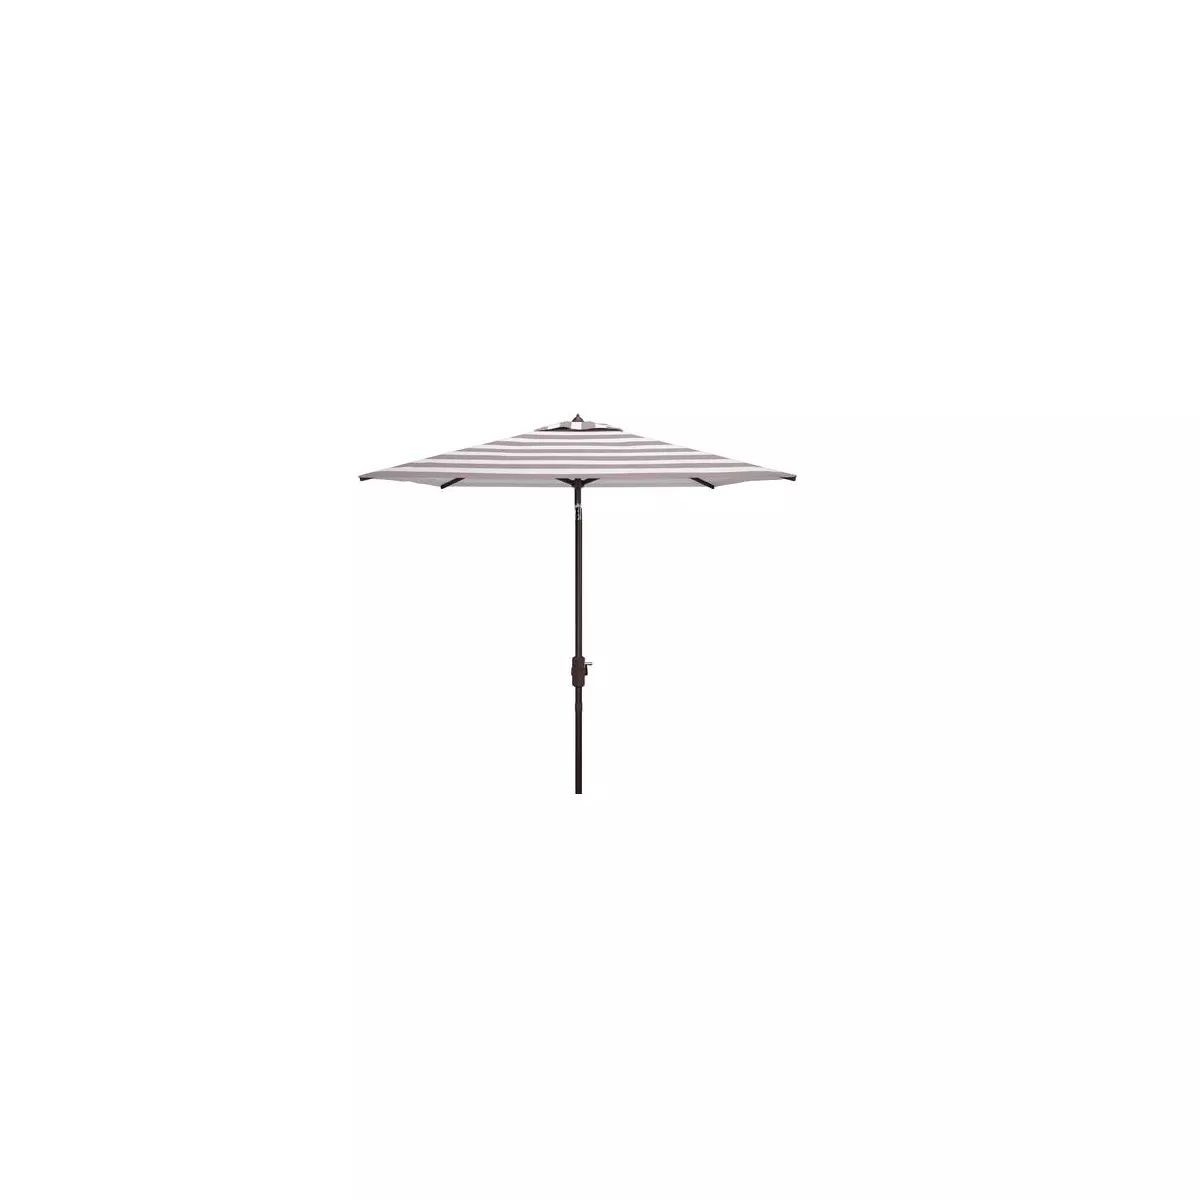 Iris Fashion Line 7.5 Ft Square Patio Outdoor Umbrella - Grey/White - Safavieh. | Target